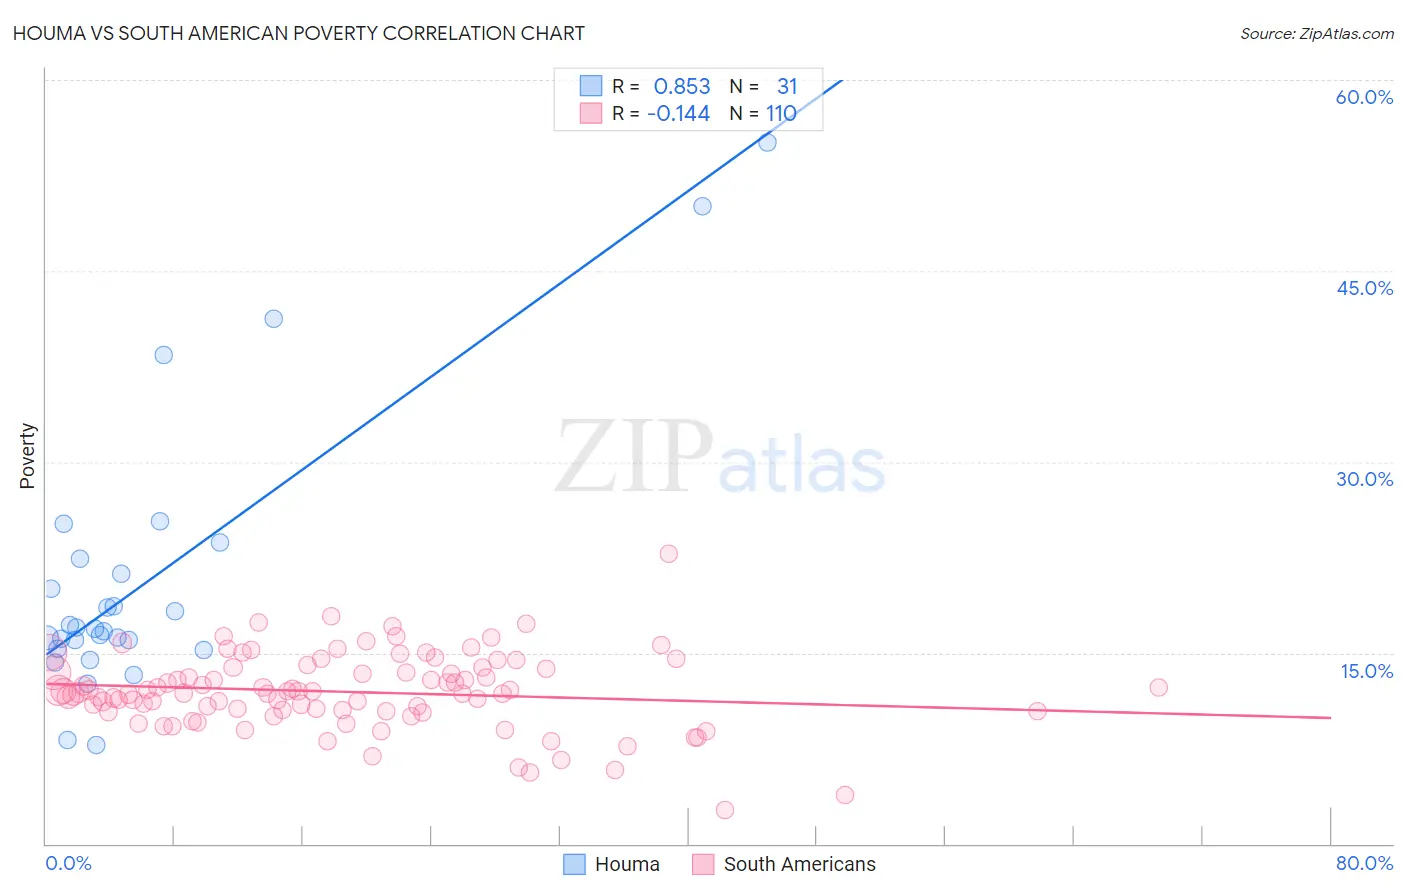 Houma vs South American Poverty